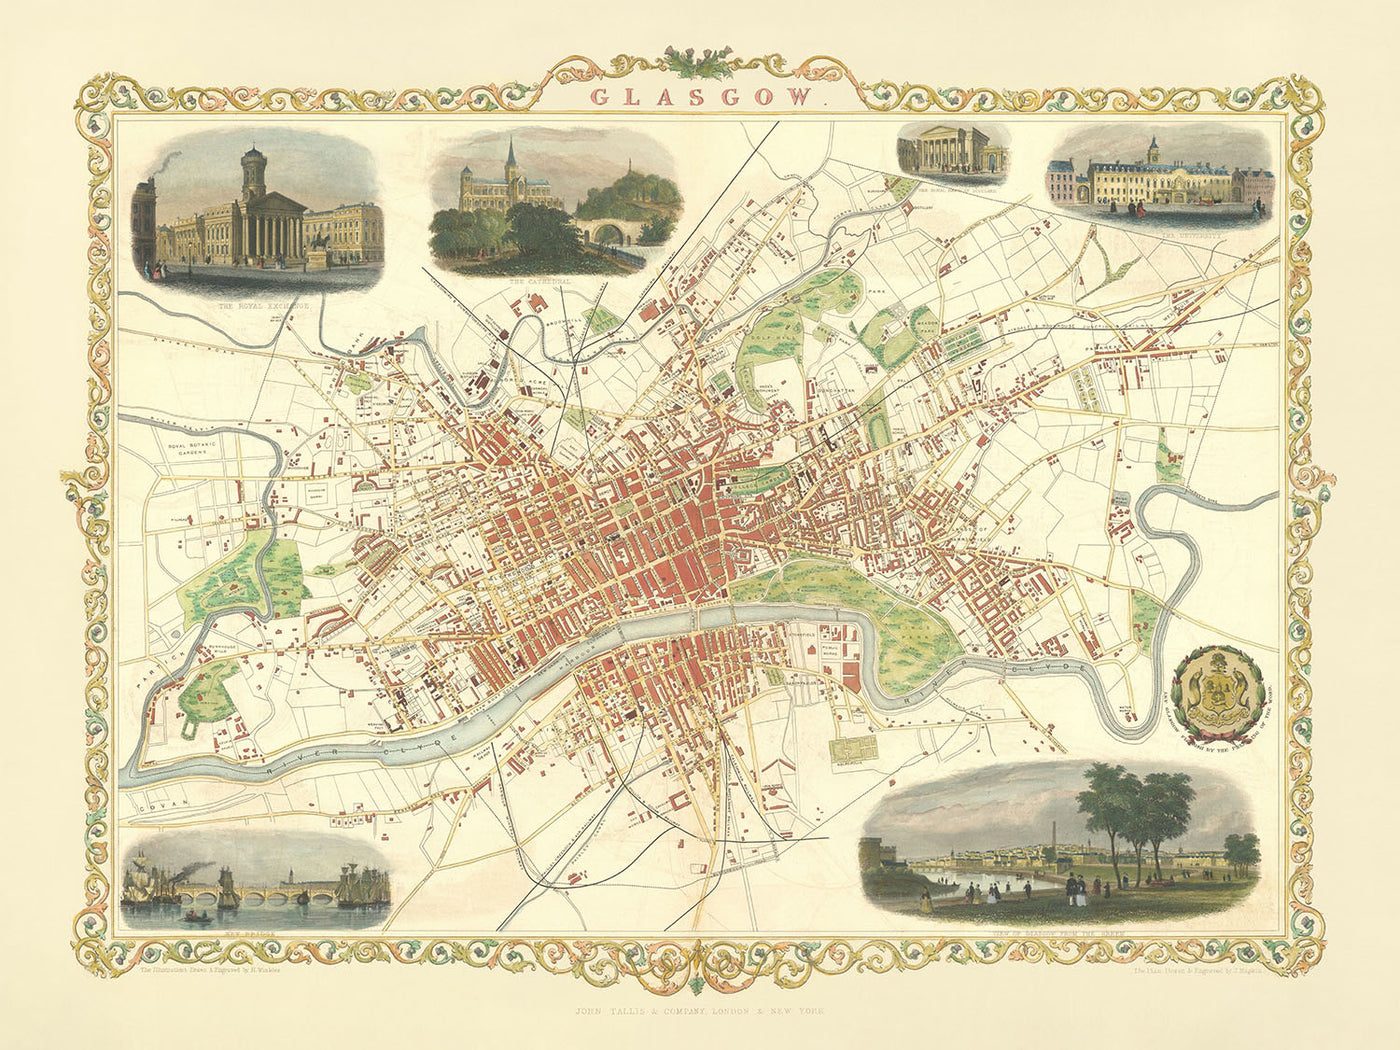 Ancienne carte de Glasgow, 1851 : Glasgow Royal Exchange, Glasgow University, Glasgow Necropolis, River Clyde, Glasgow Green